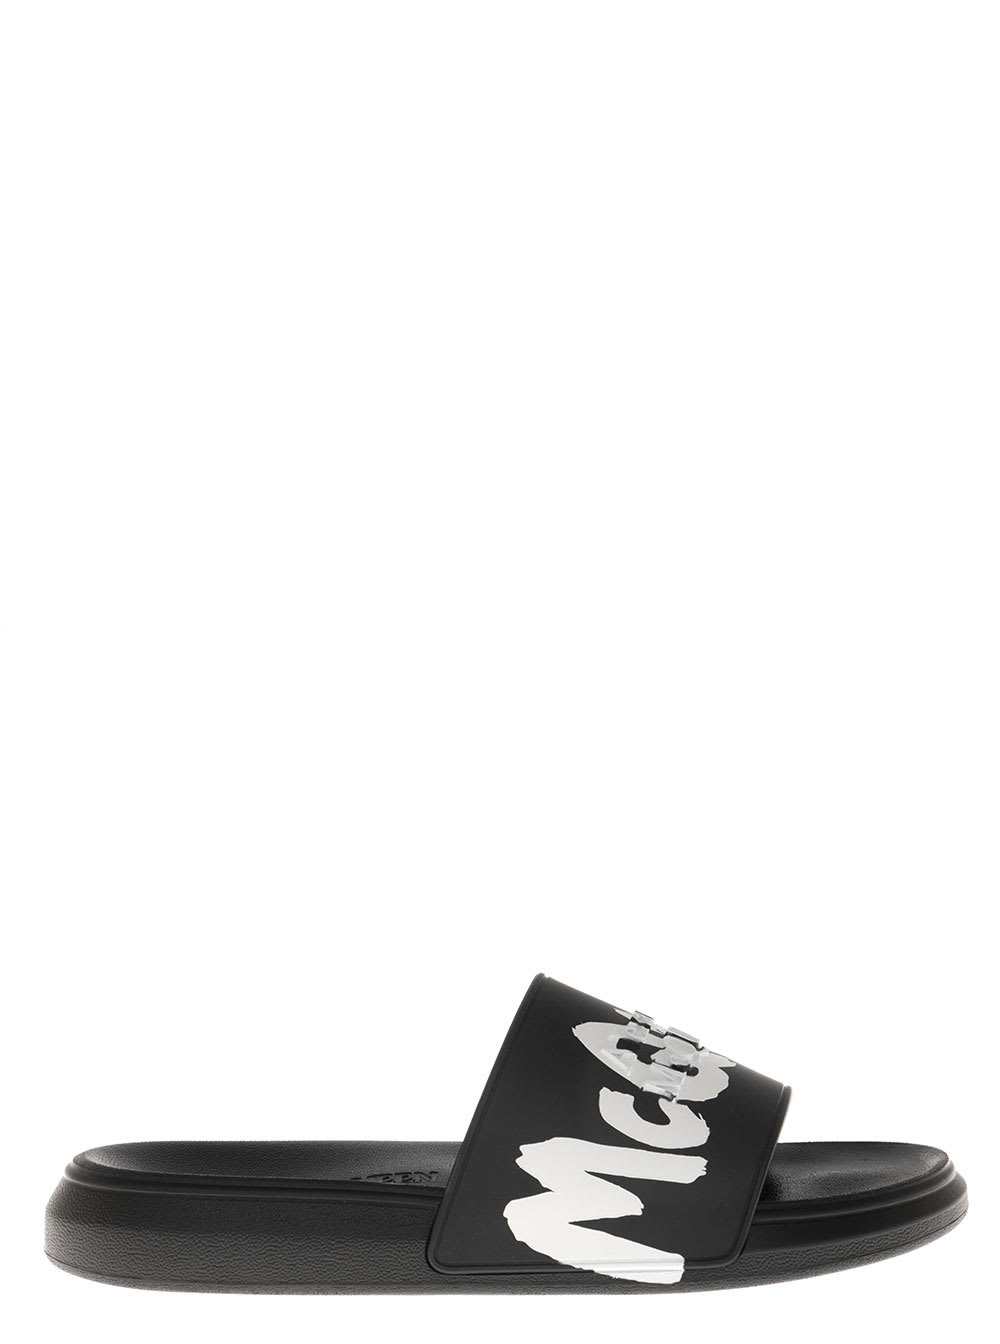 Alexander McQueen Black Rubber Slide Sandals With Logo